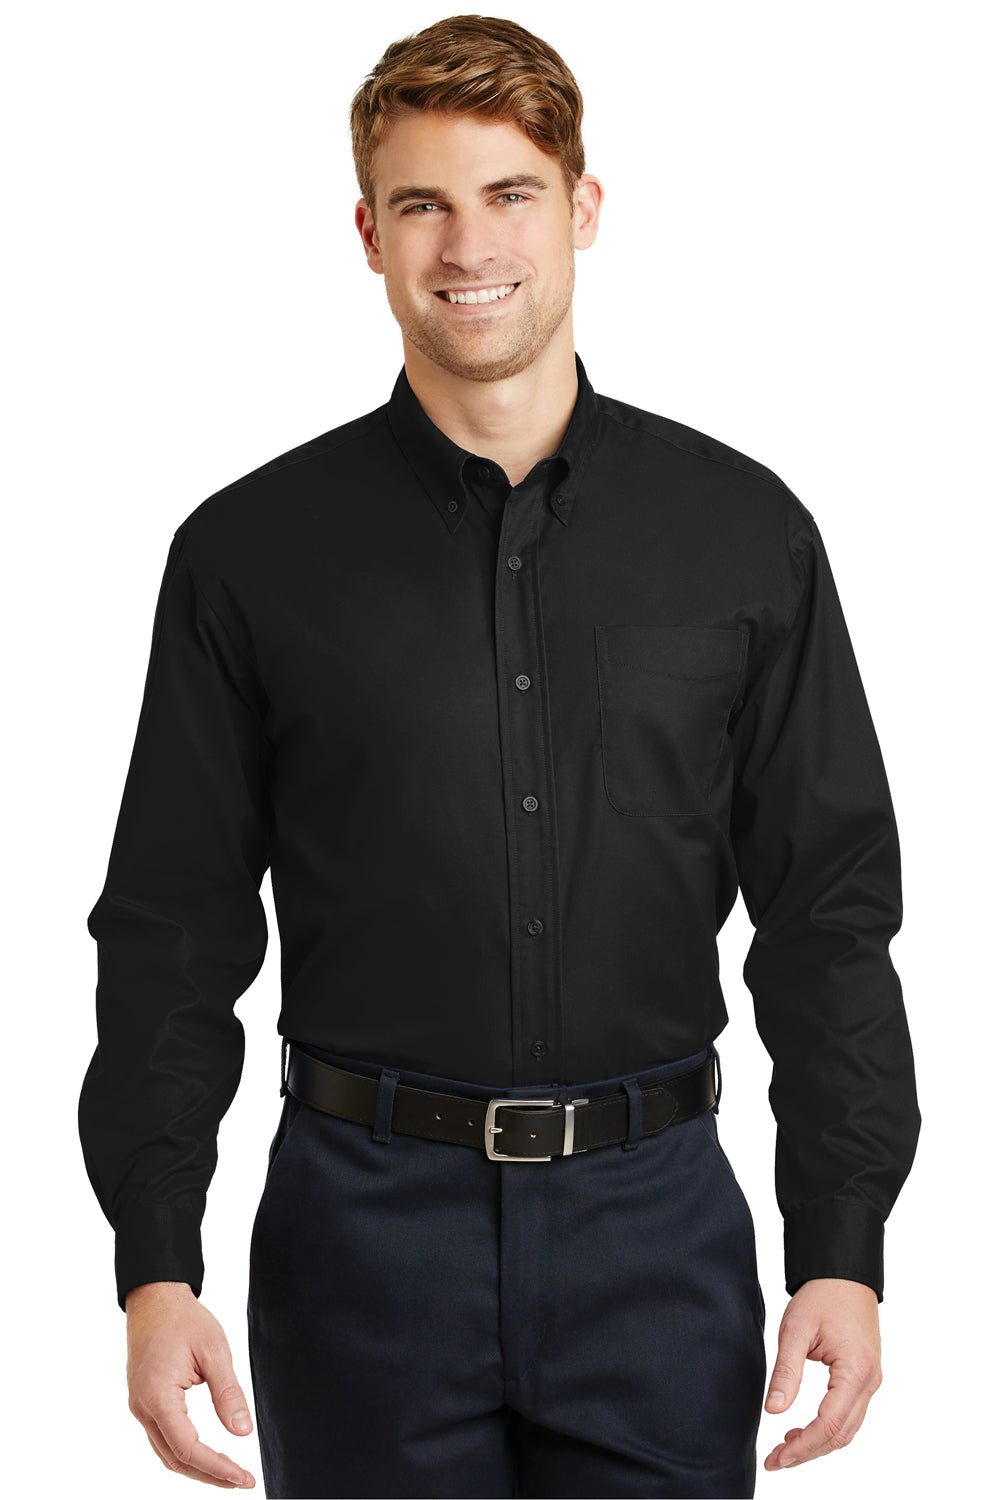 CornerStone SP17 Mens SuperPro Stain Resistant Long Sleeve Button Down Shirt w/ Pocket Black Front